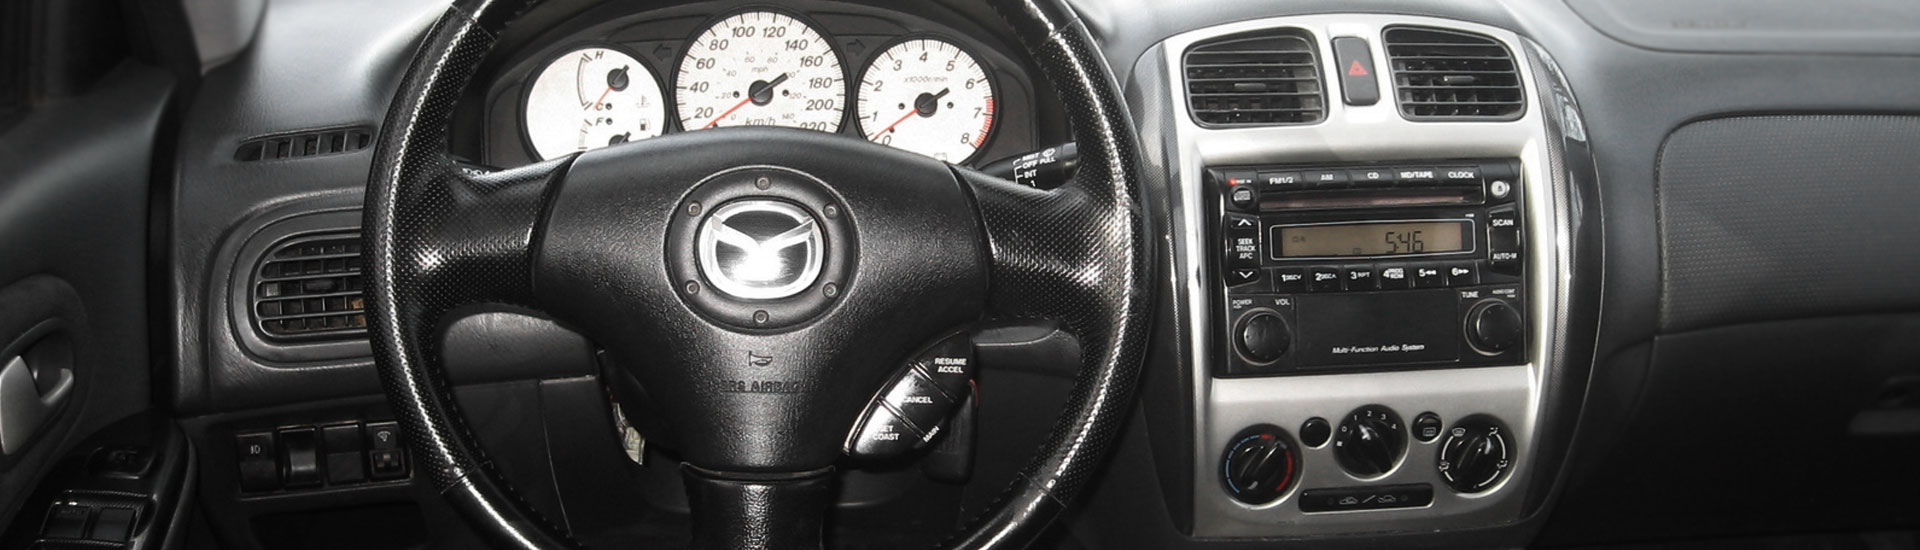 Mazda Protege Custom Dash Kits